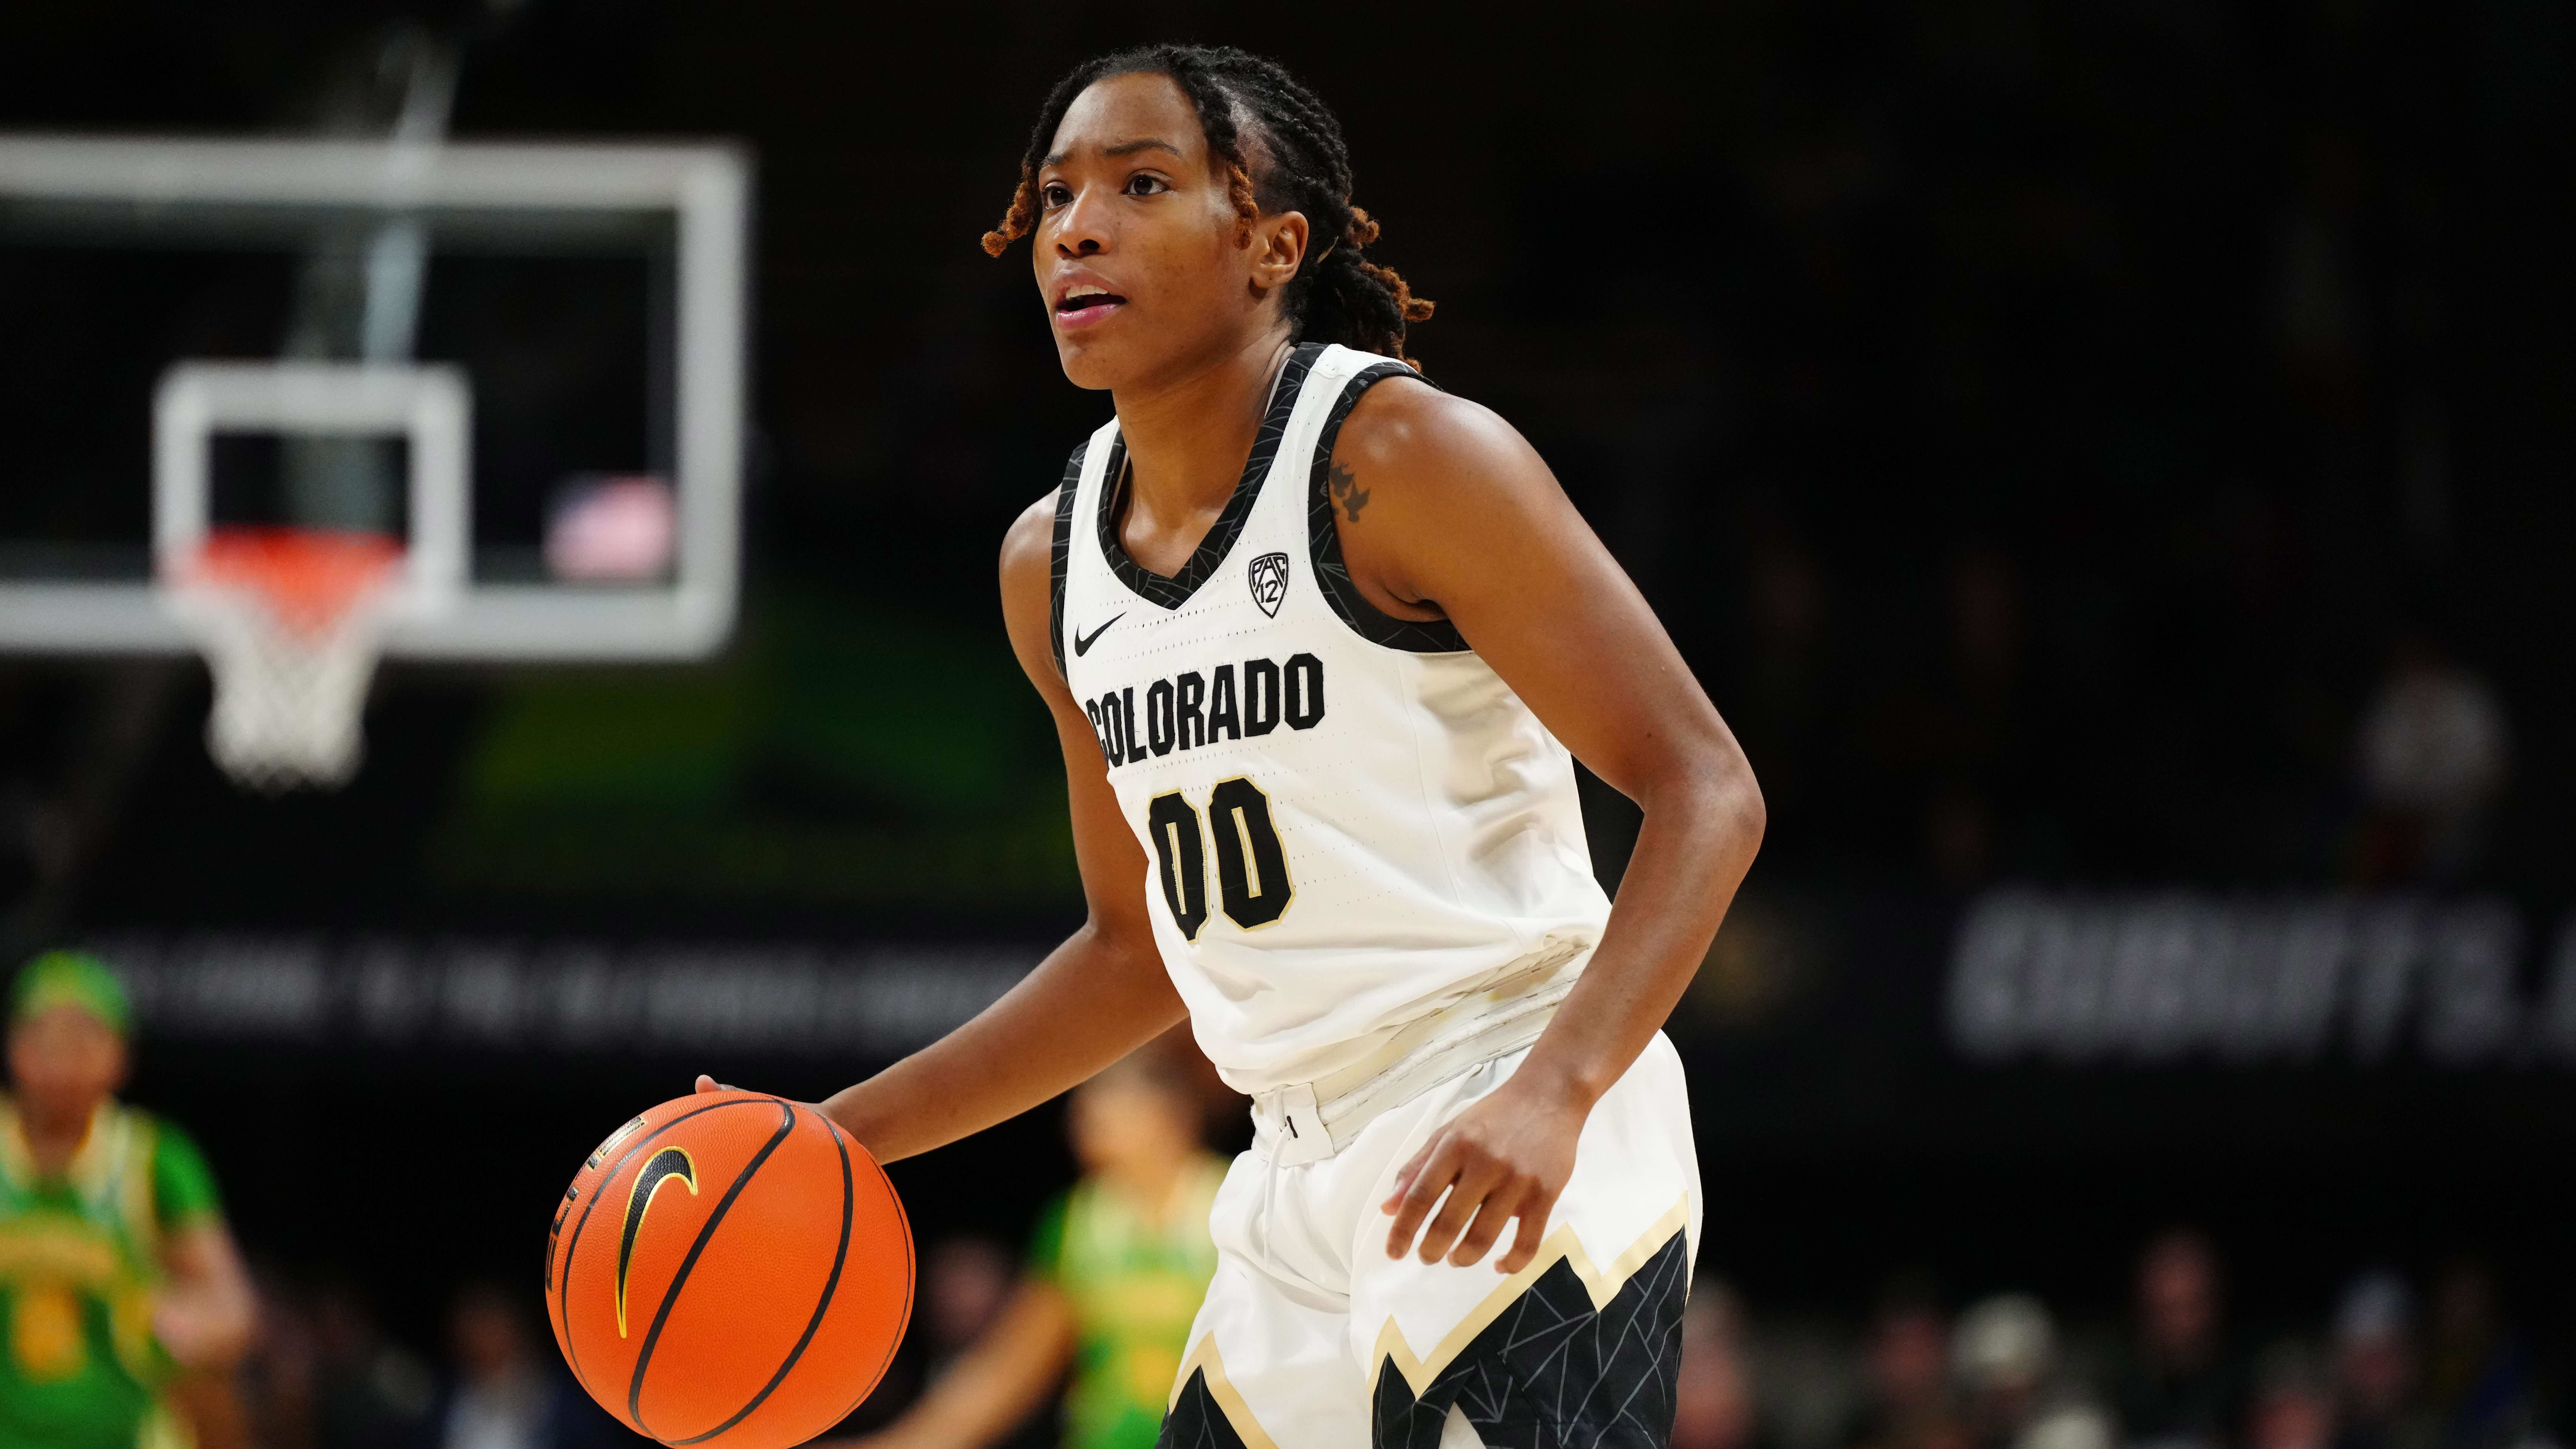 Colorado’s Jaylyn Sherrod signs with WNBA’s New York Liberty